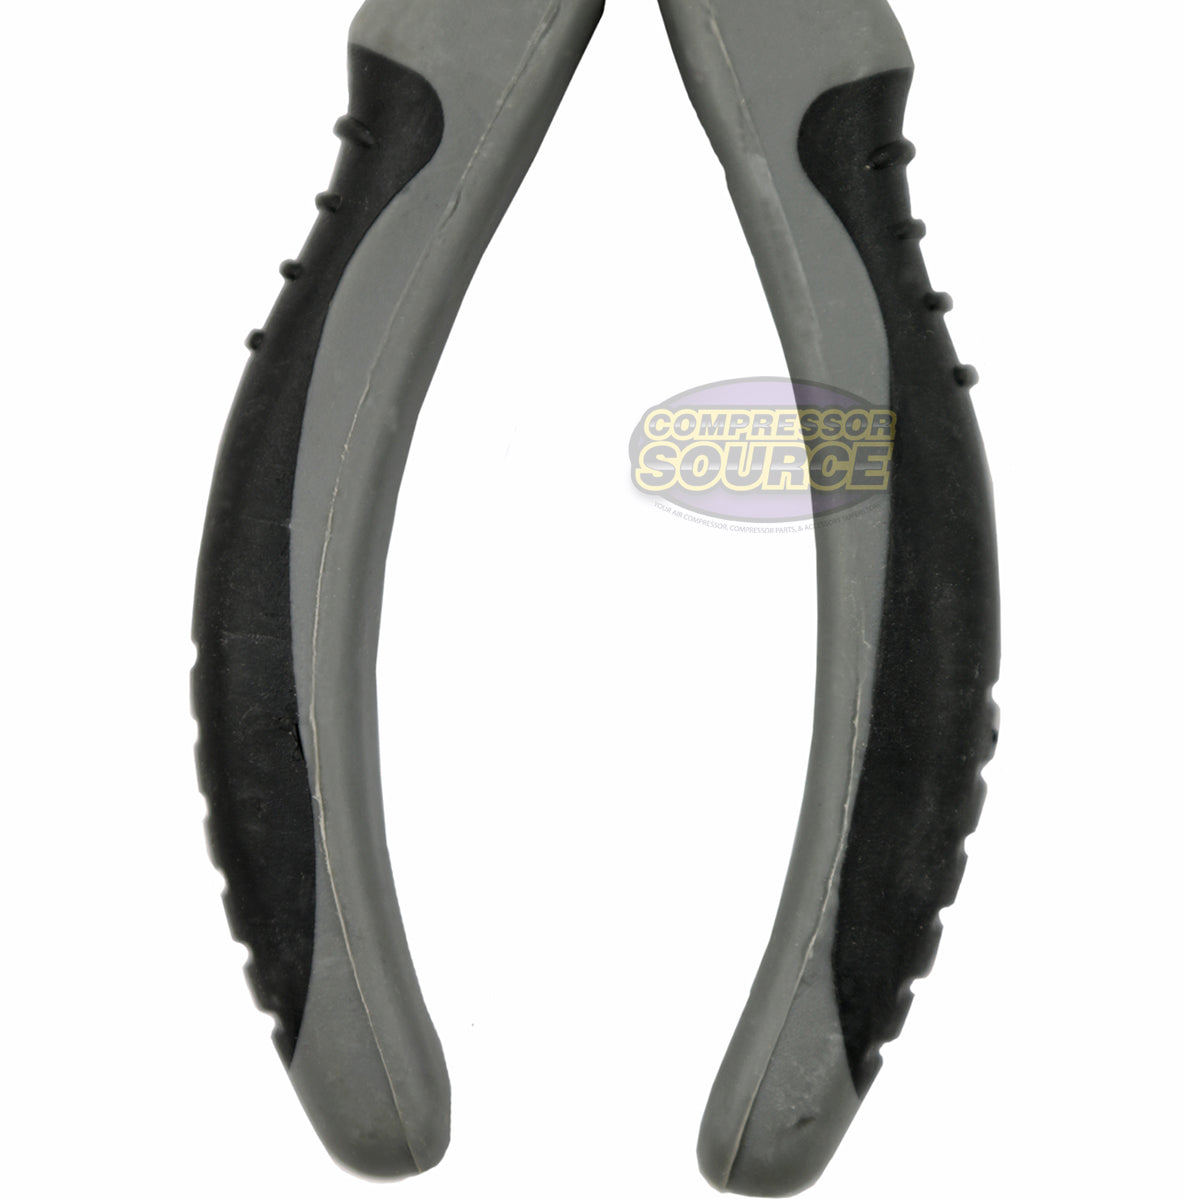 8" Long Needle Nose Pliers Wire Cutters Non-Slip Grip Handle Pro Grade 15211